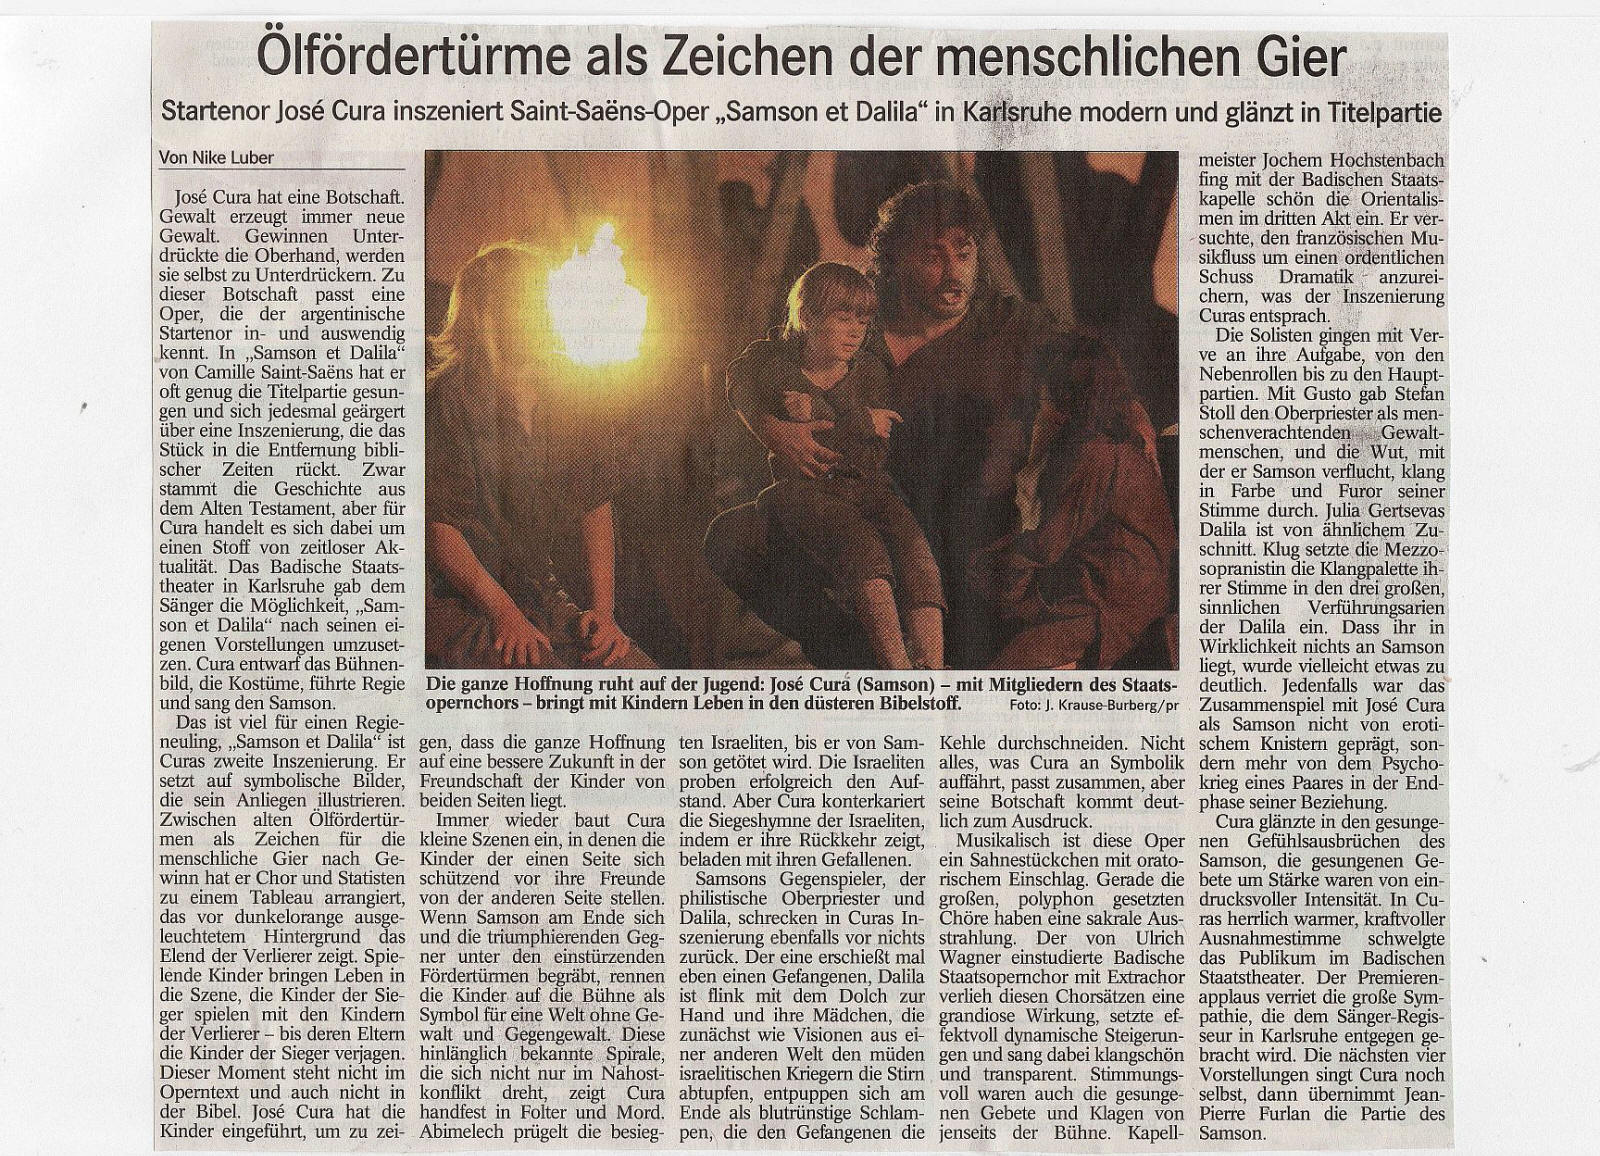 Press for Jos Cura's  production of Samson et Dalila in Karlsruhe 2010.